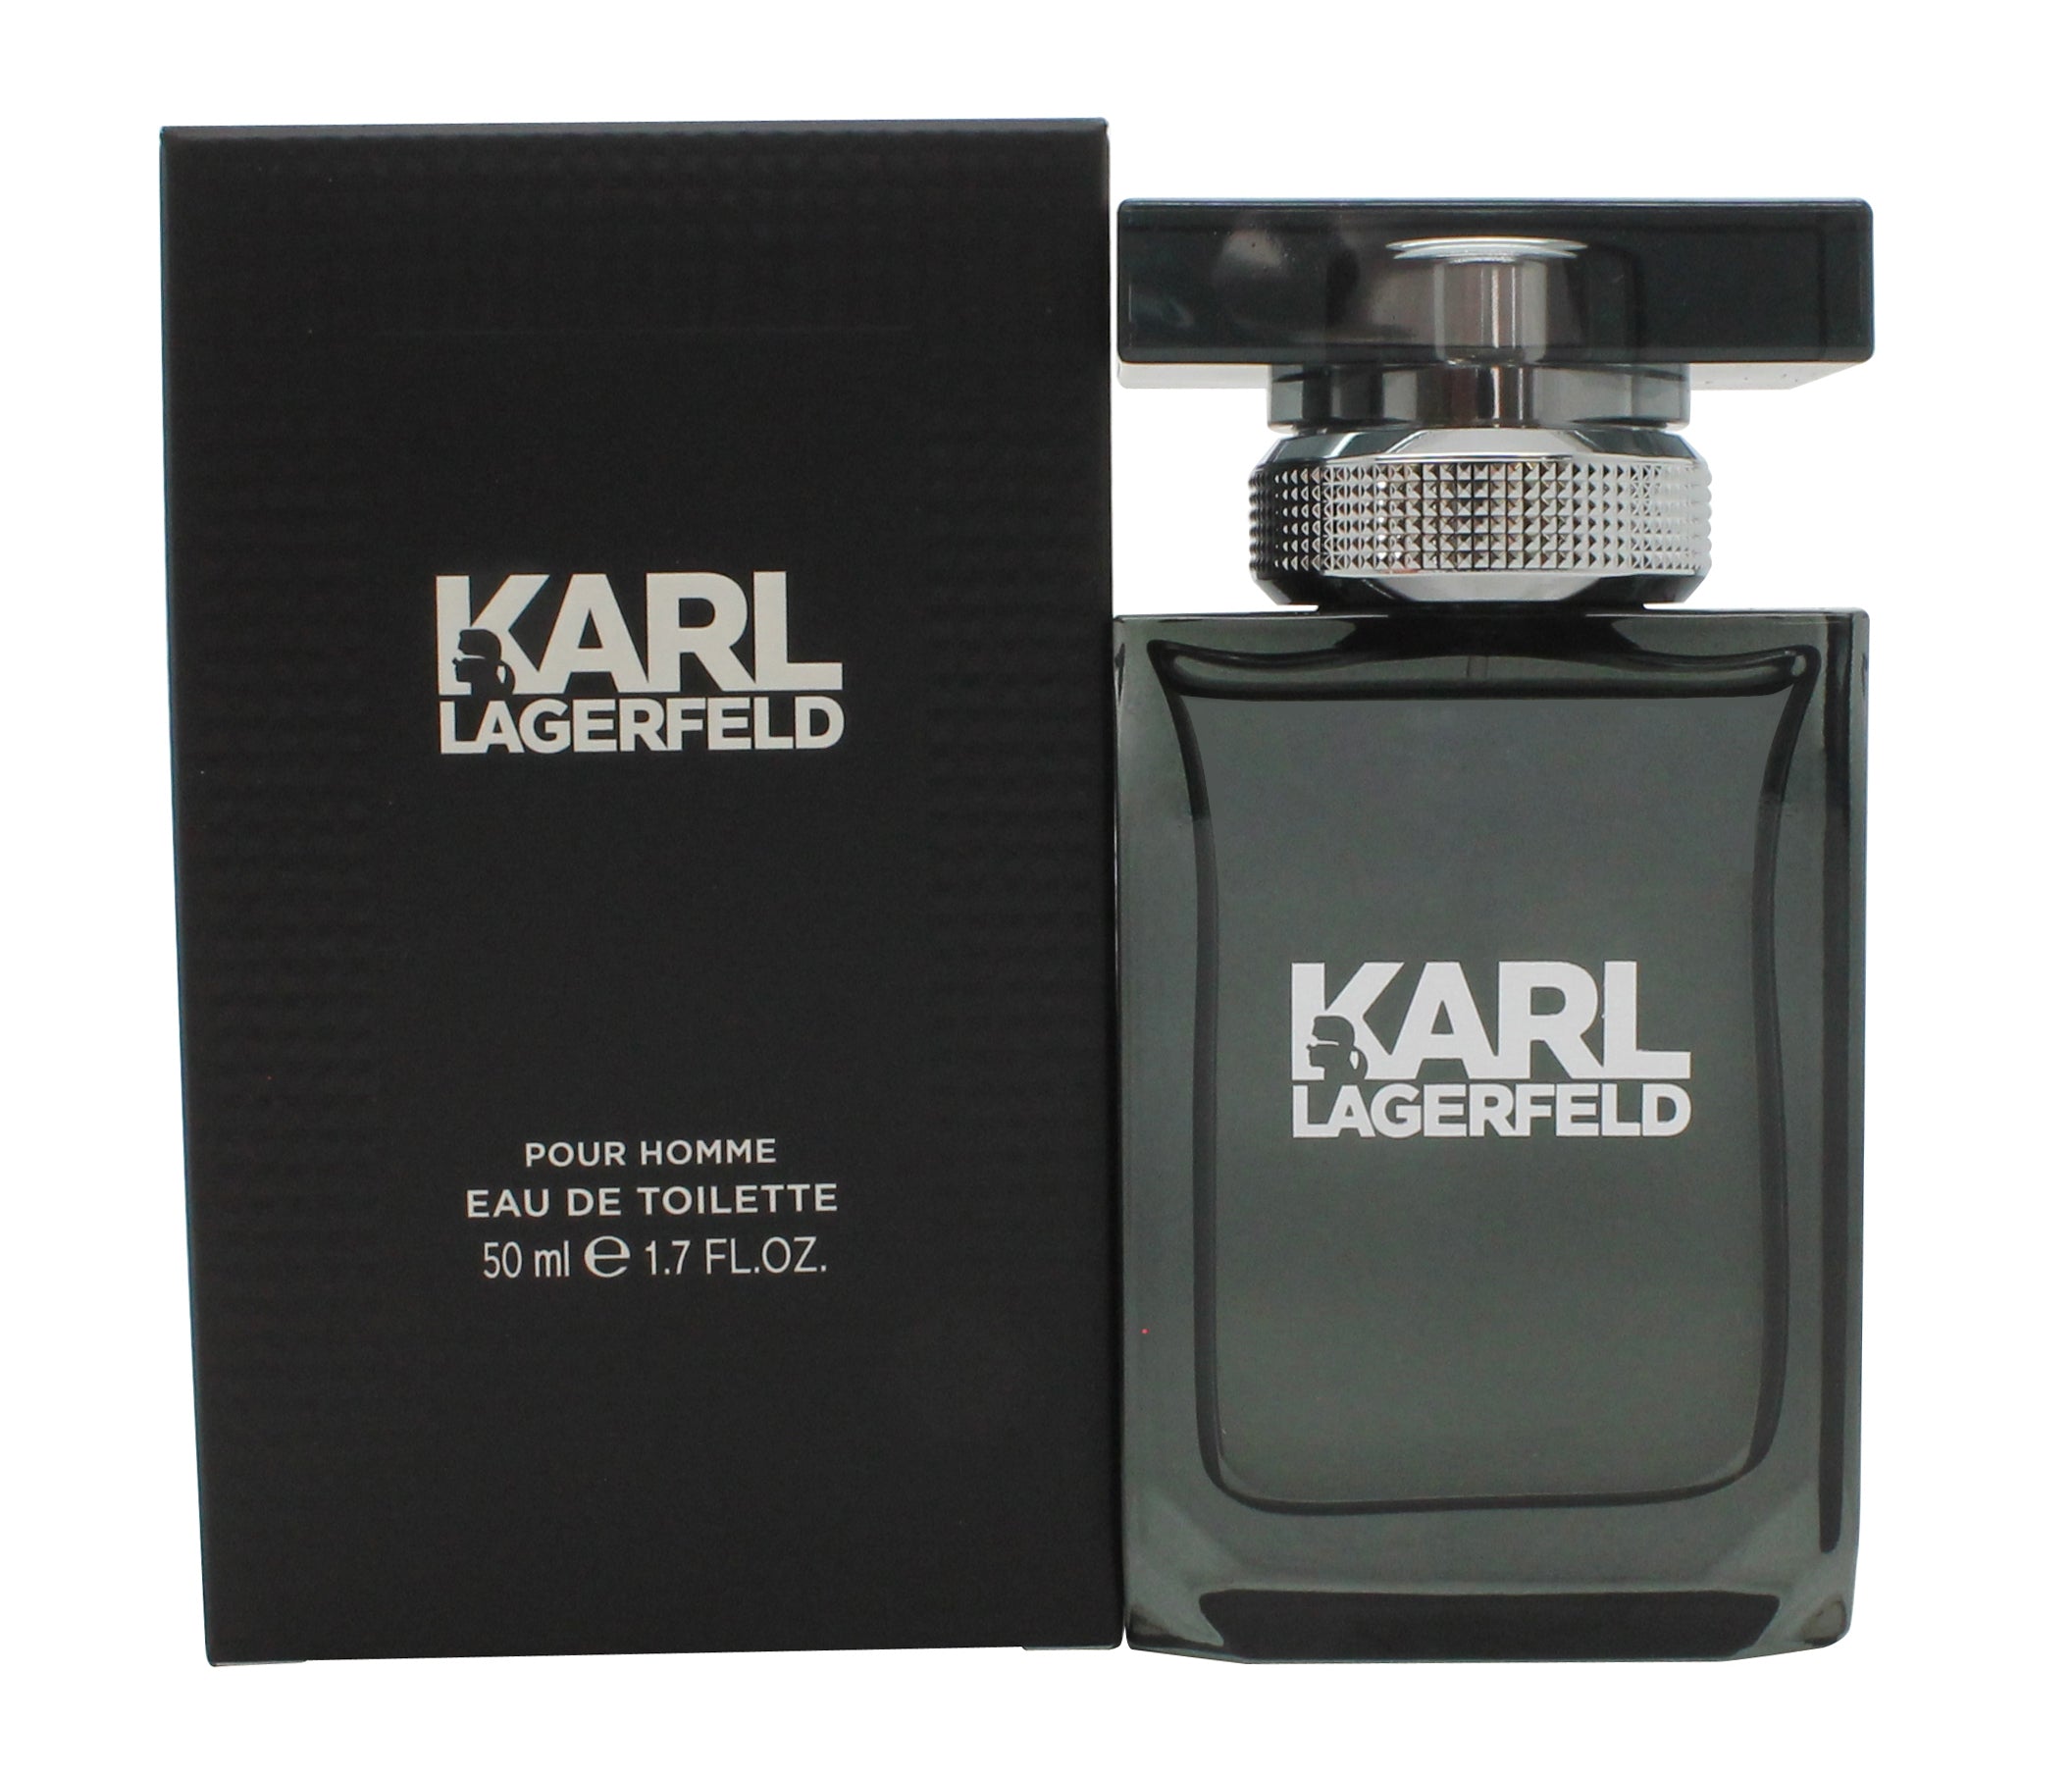 View Karl Lagerfeld for Him Eau de Toilette 50ml Spray information